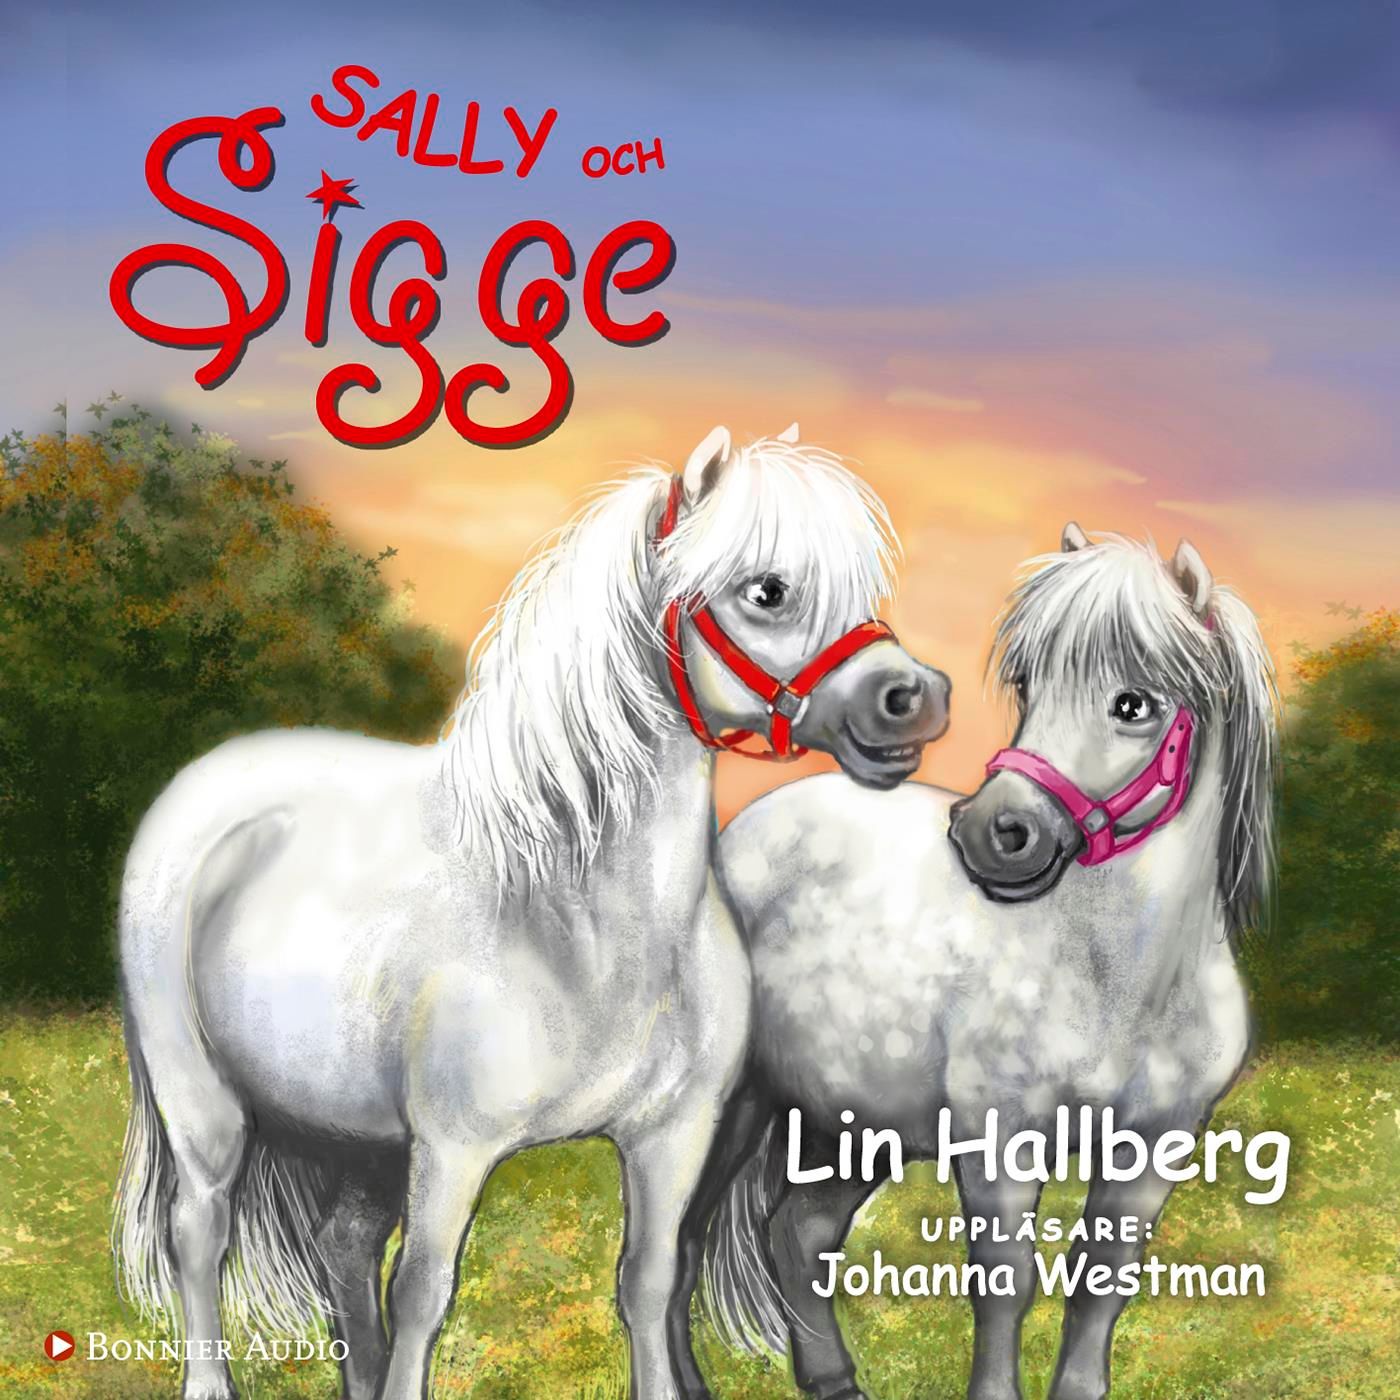 Sally och Sigge, audiobook by Lin Hallberg